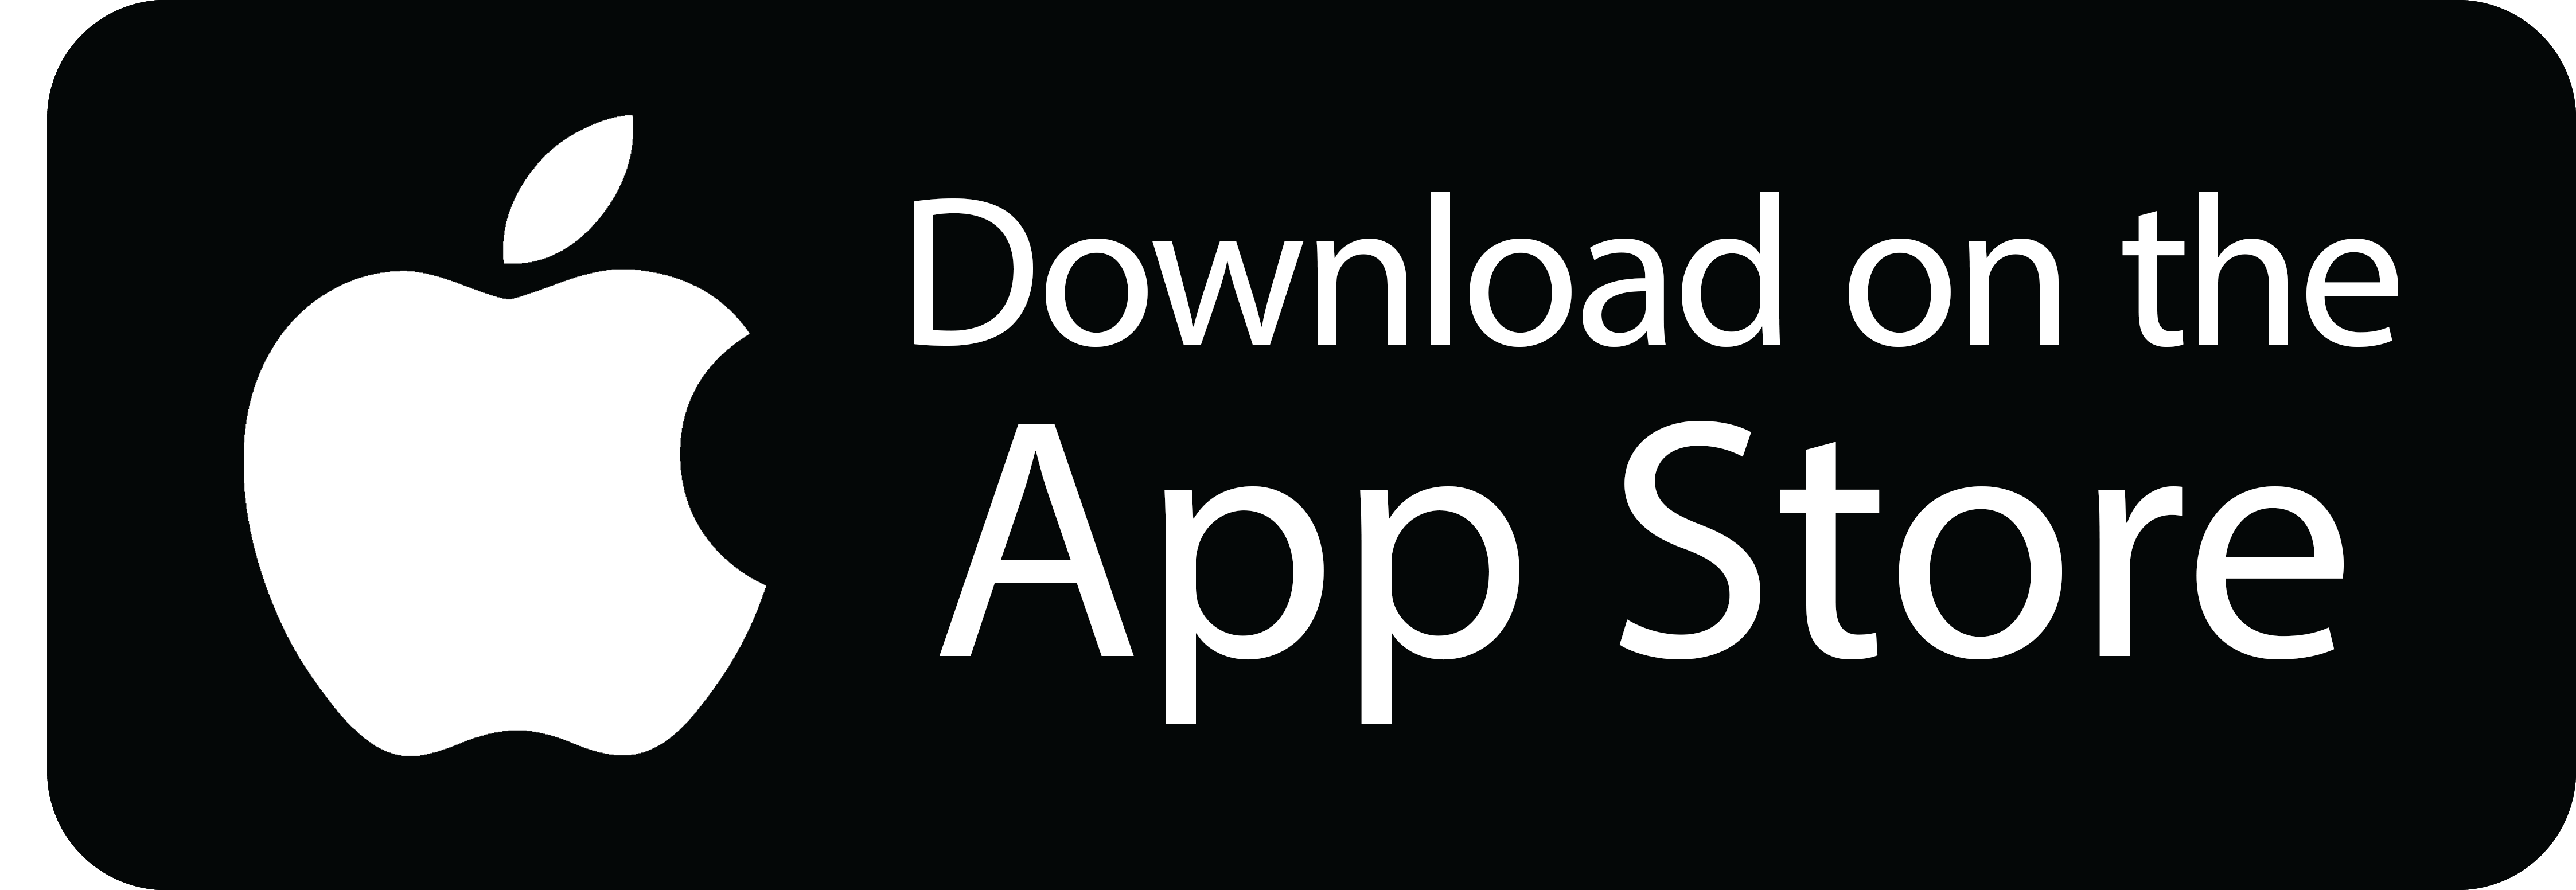 Google Store Logo - App Store Logo